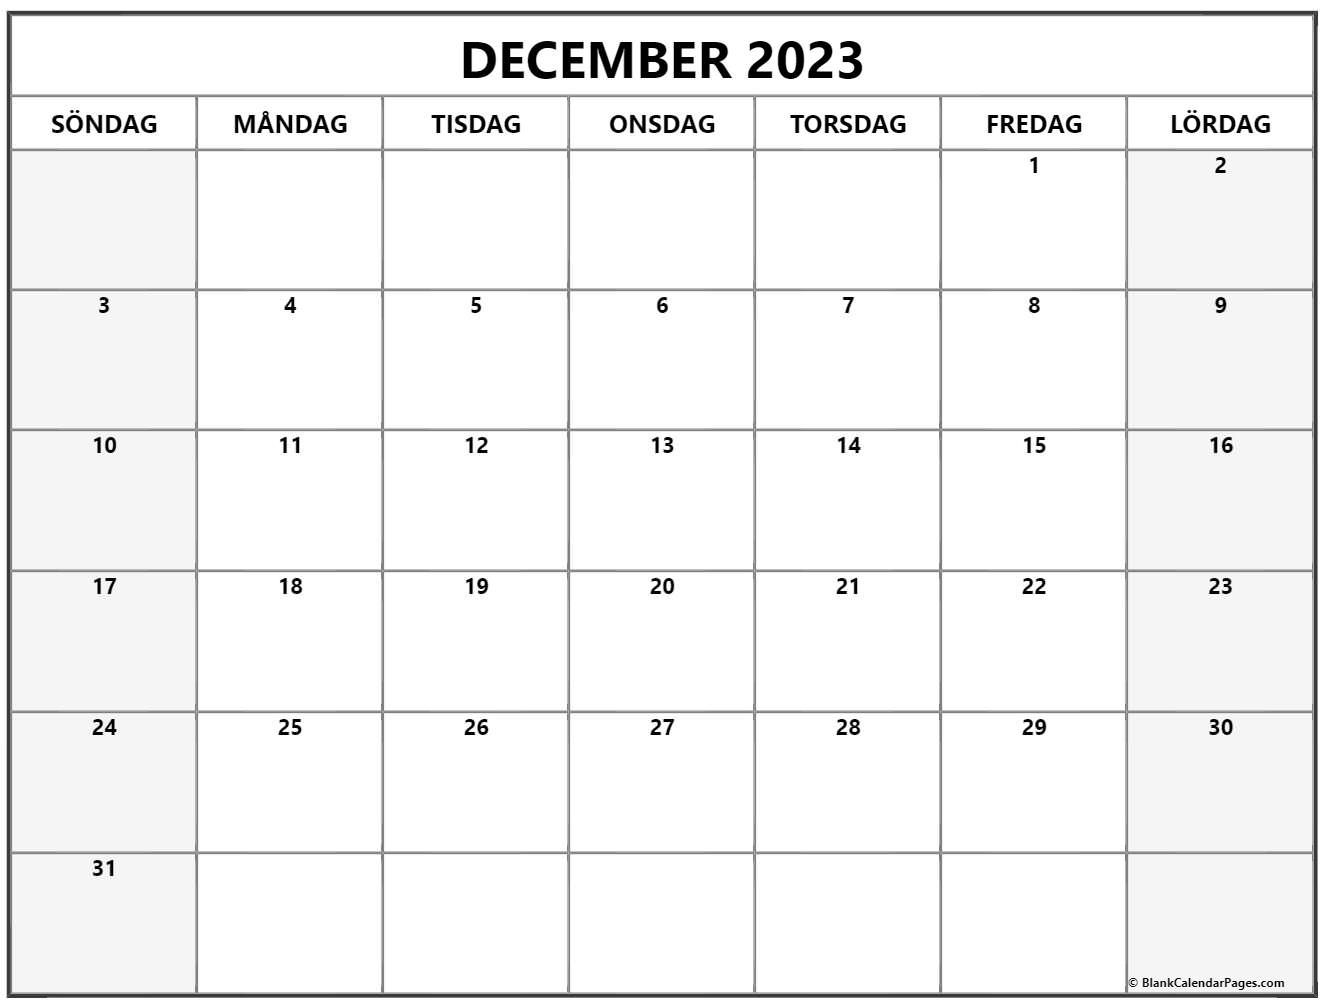 December 2023 Kalender Svenska Kalender December